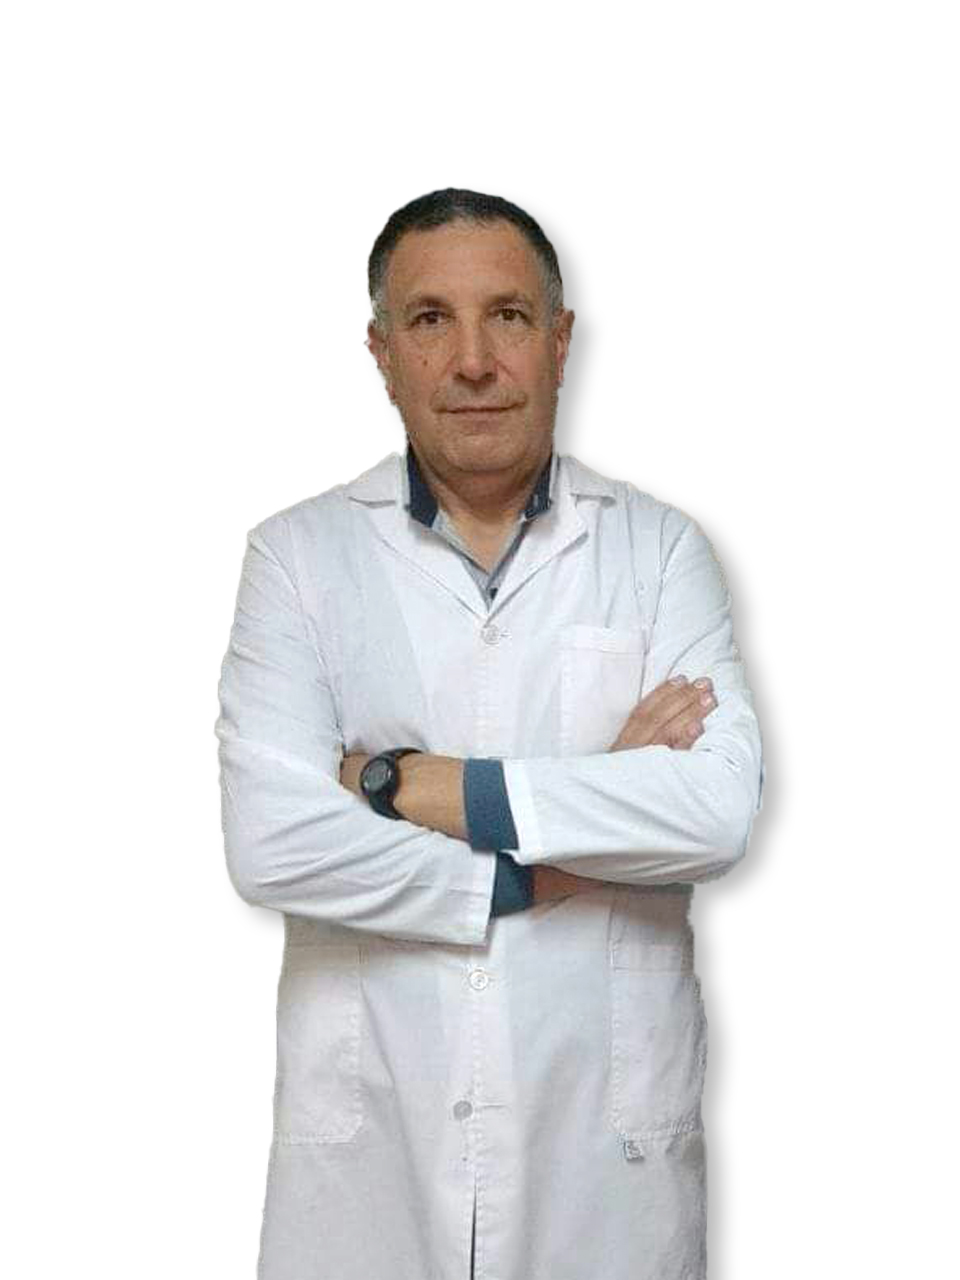 Dr. Ingelmo, Santiago